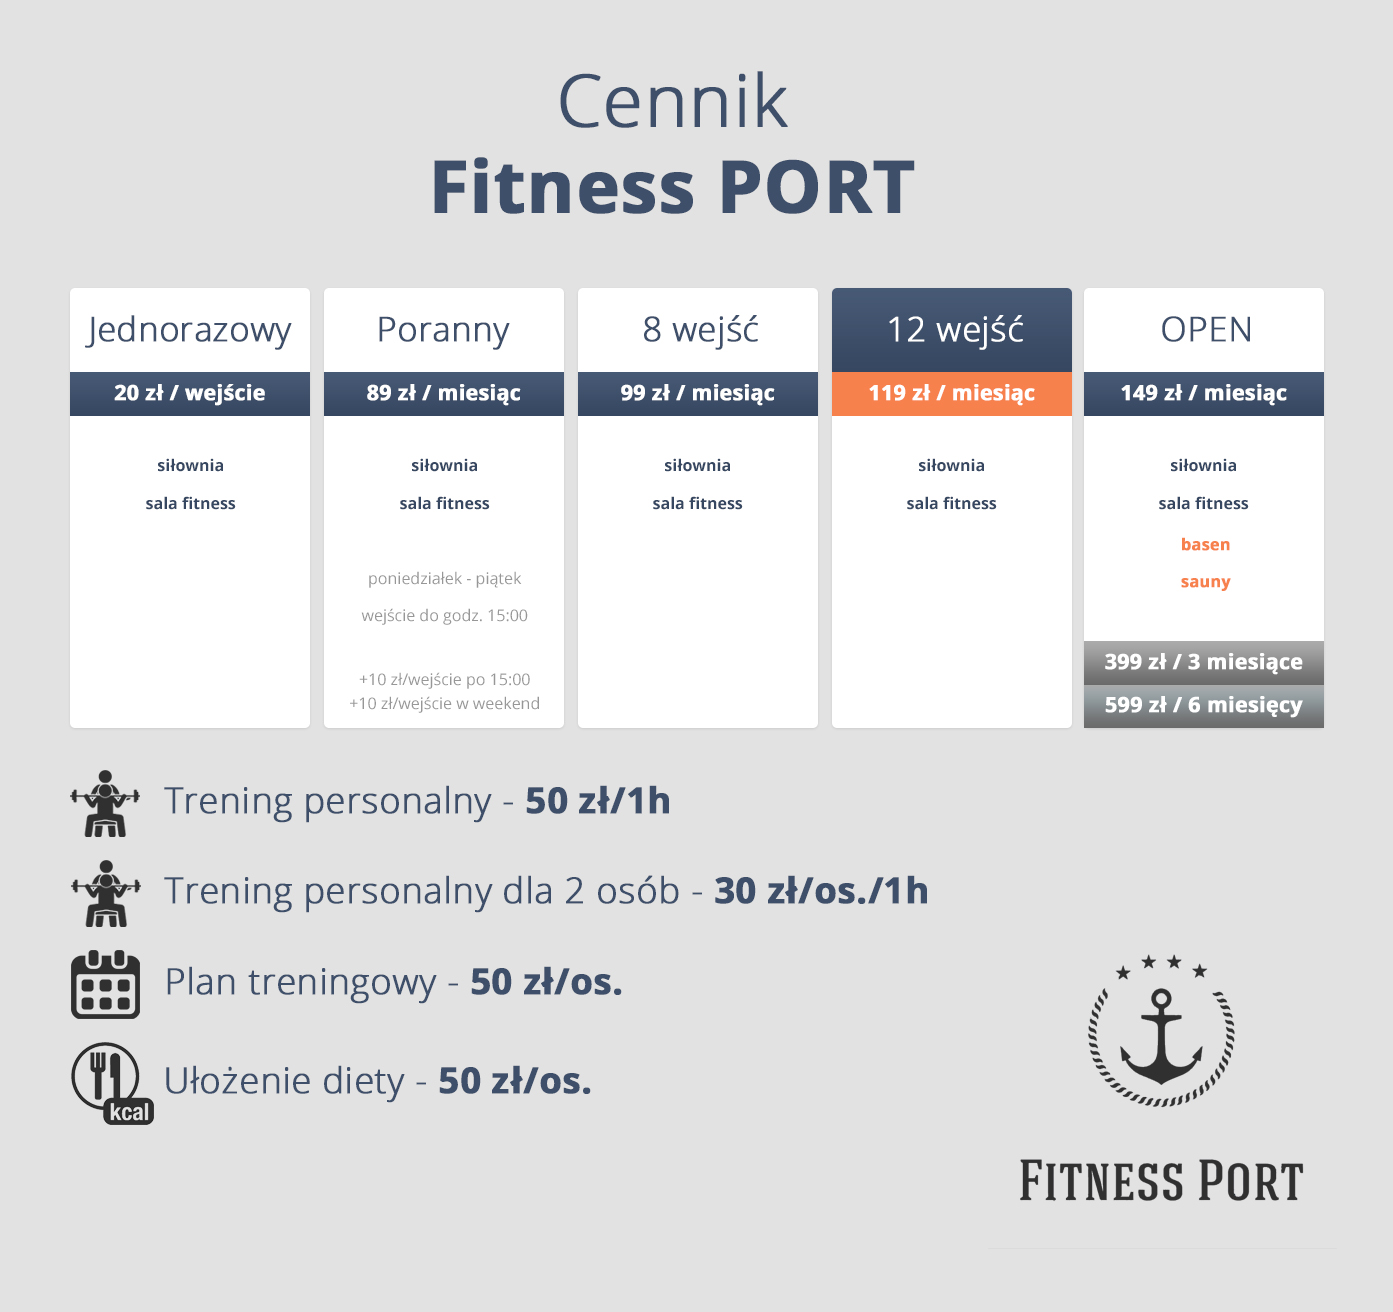 Cennik Fitness Port 2019